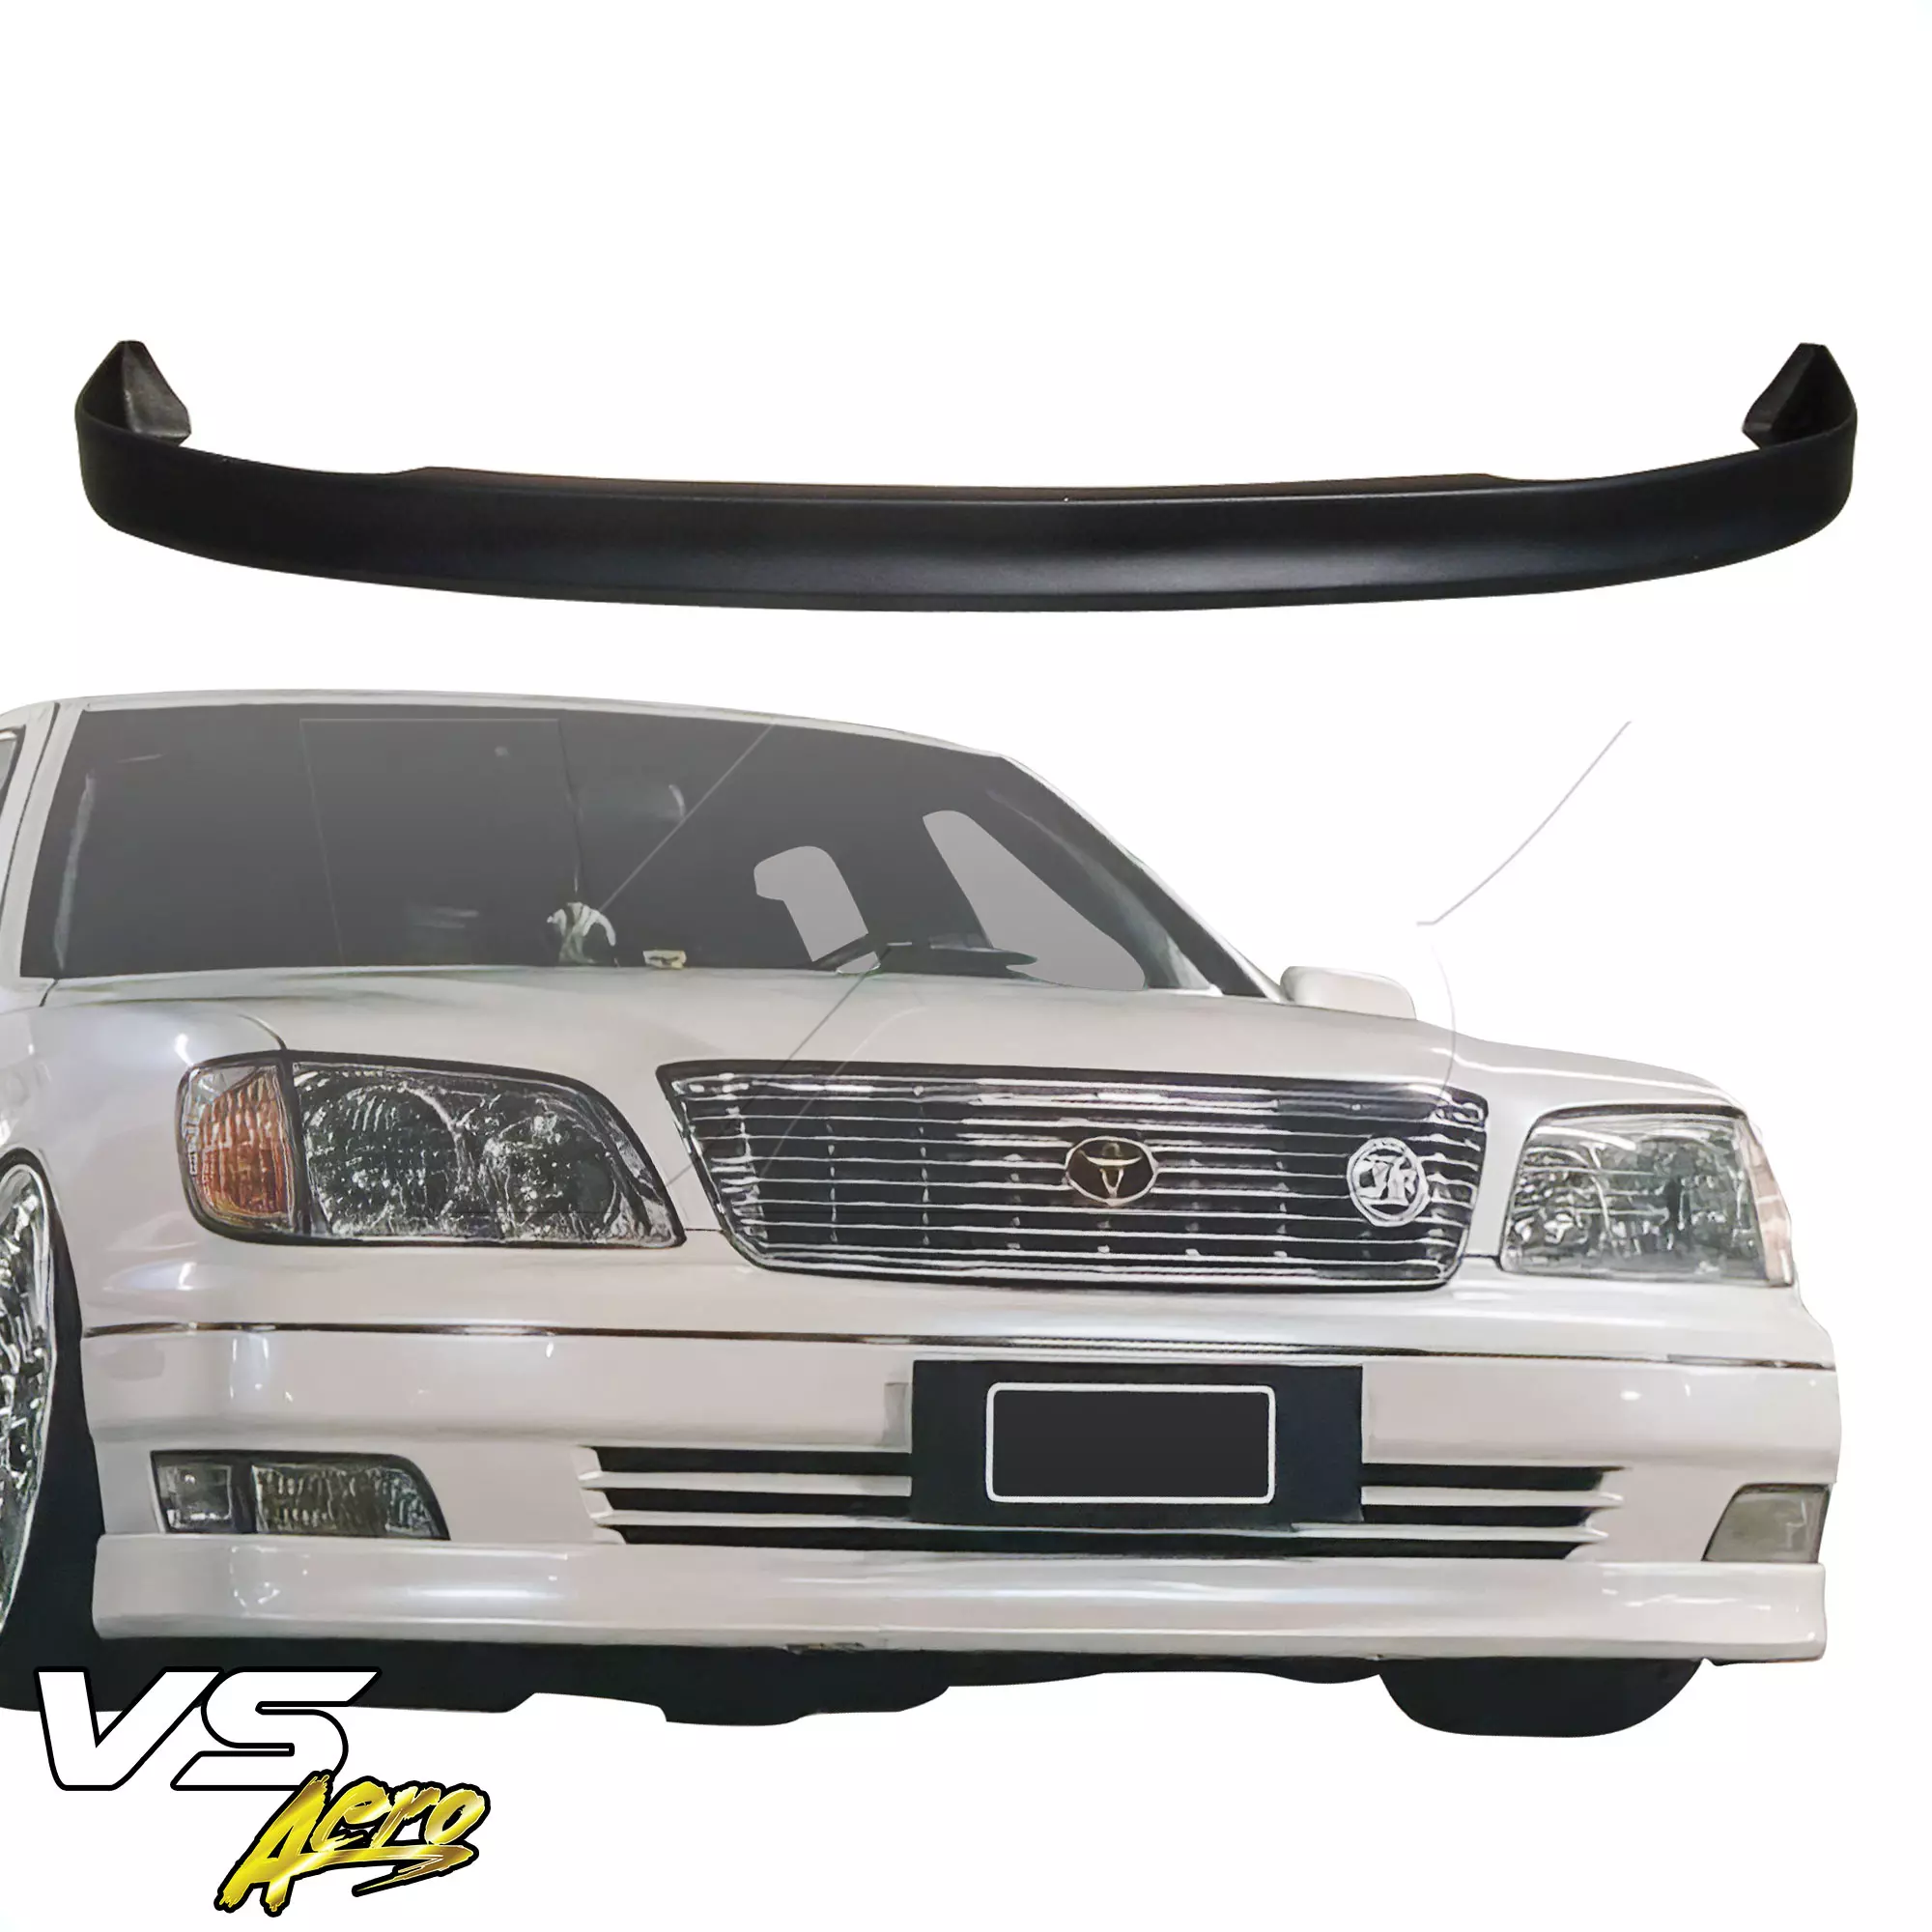 VSaero FRP FKON Body Kit 4pc > Lexus LS Series LS400 UCF21 1998-2000 - Image 41